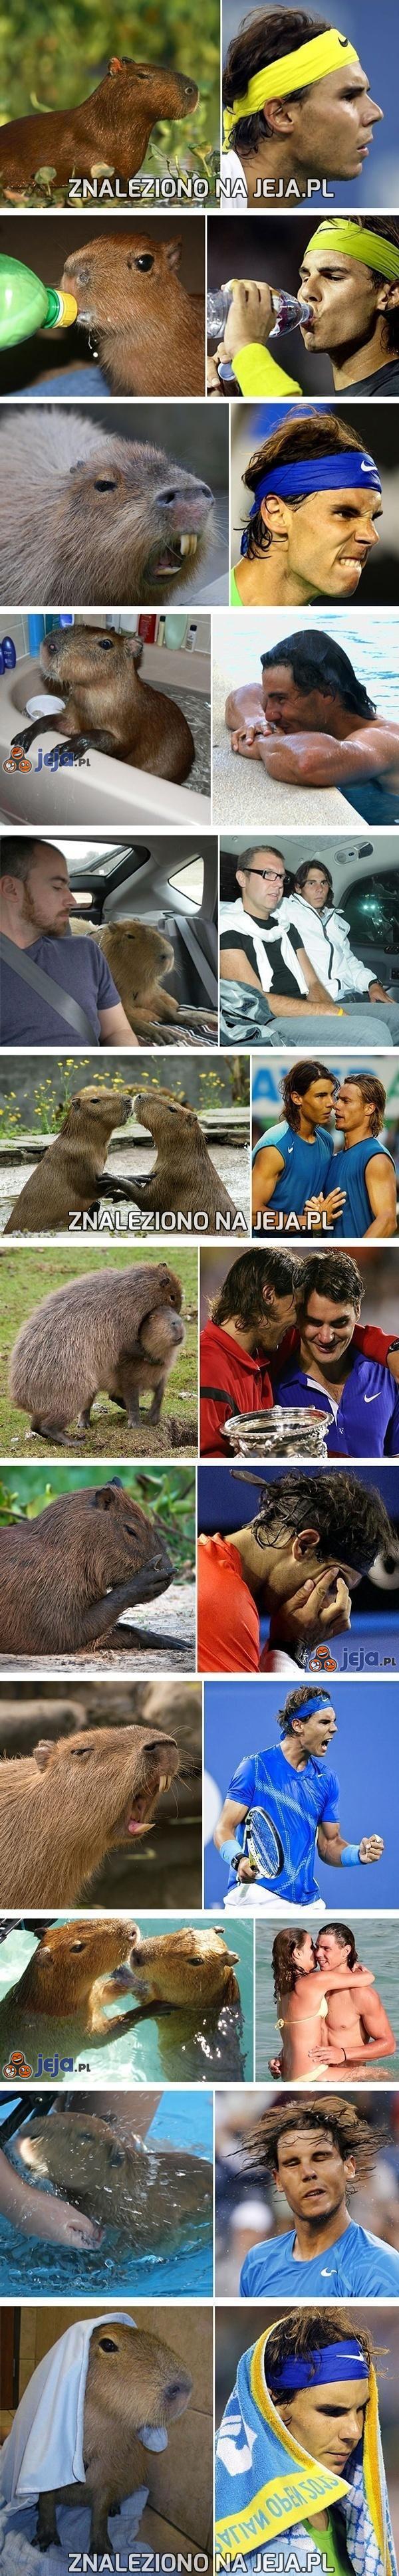 Rafael Nadal, czy może kapibara?